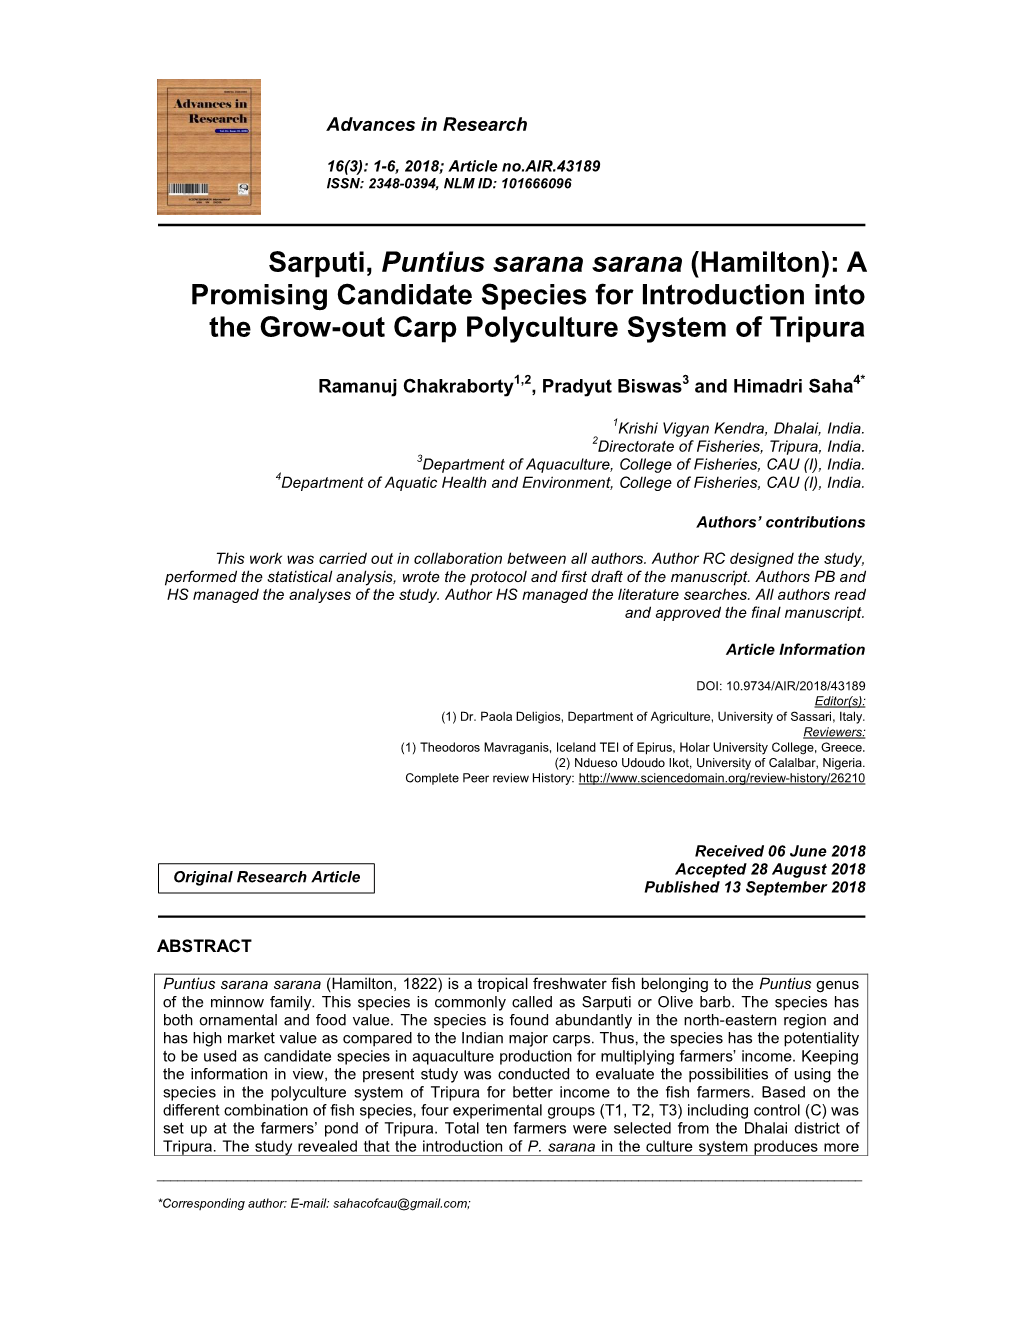 Sarputi, Puntius Sarana Sarana (Hamilton): a Promising Candidate Species for Introduction Into the Grow-Out Carp Polyculture System of Tripura